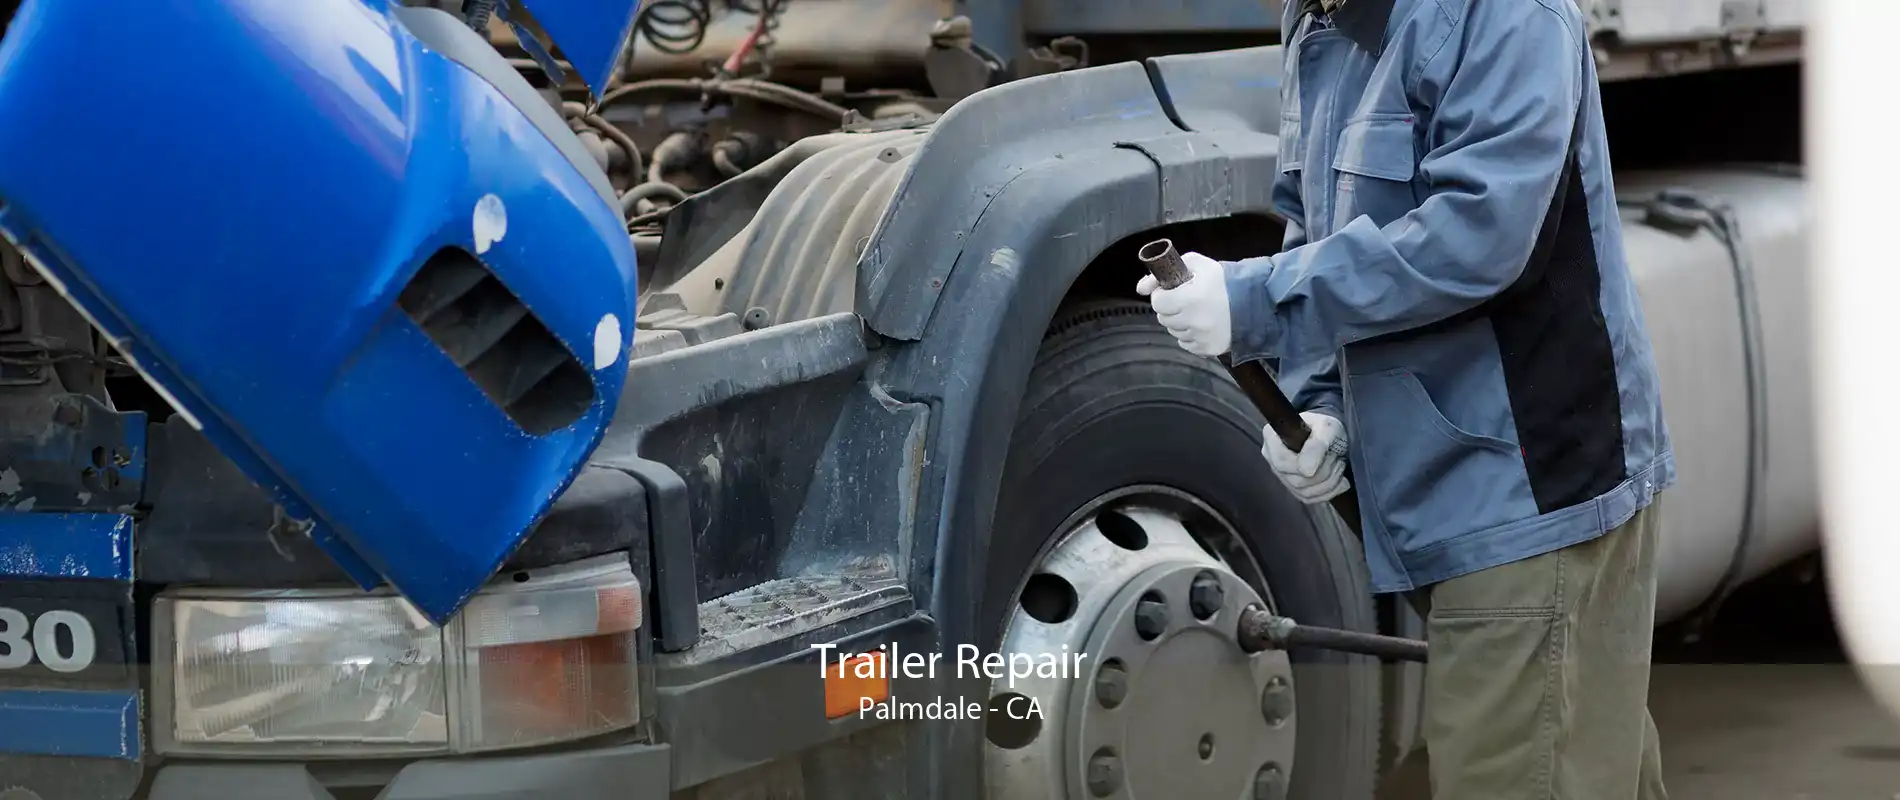 Trailer Repair Palmdale - CA